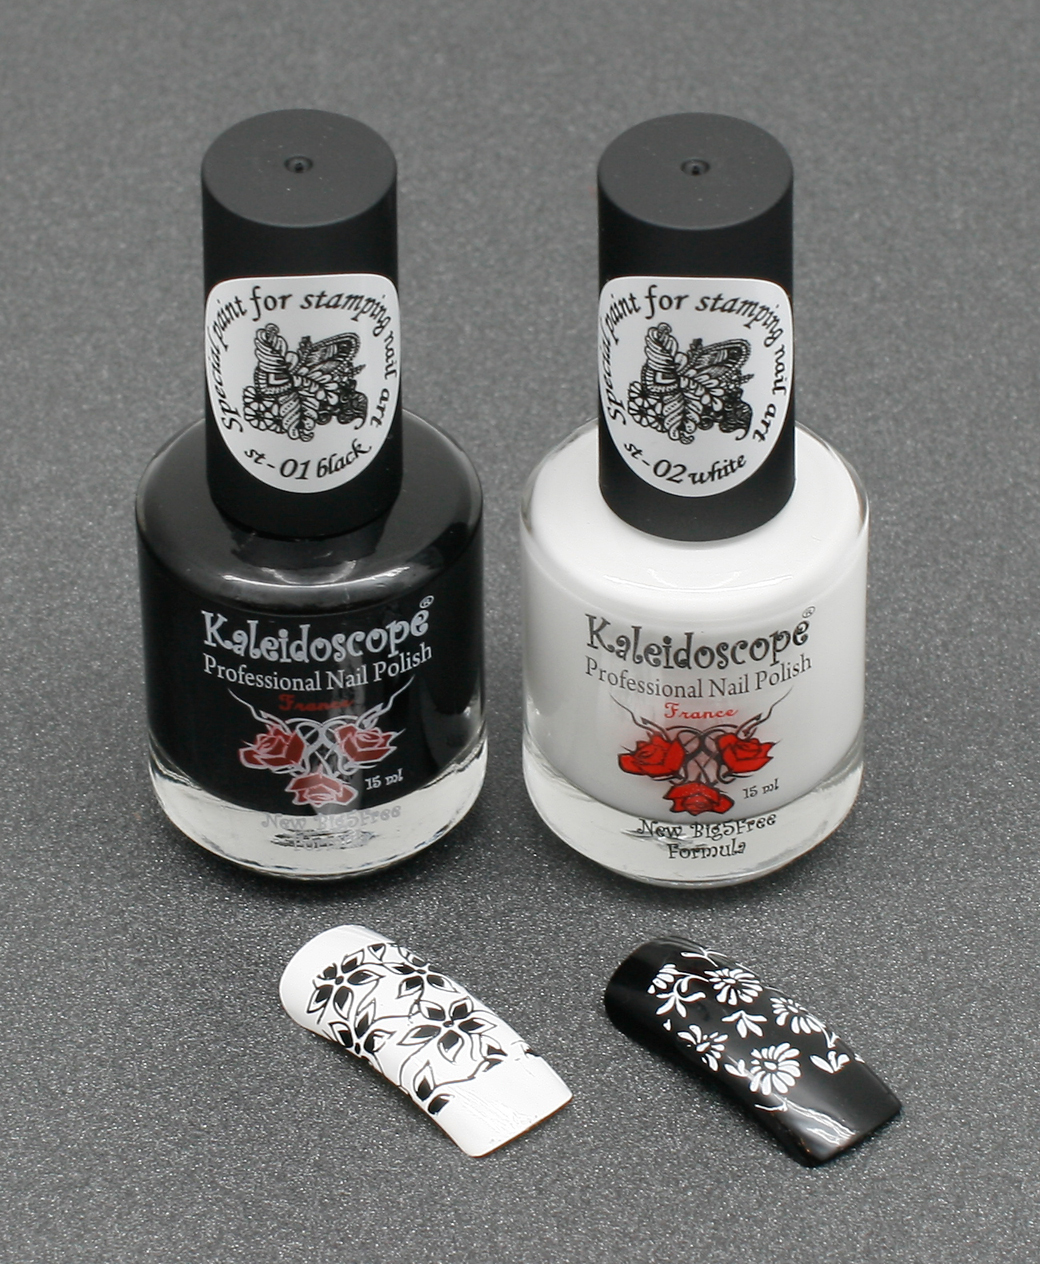 EL Corazon Kaleidoscope Special paint for stamping nail art st-01 black (черный) st-02 white (белый), краска для стемпинга, Эль коразон краска для стемпинга